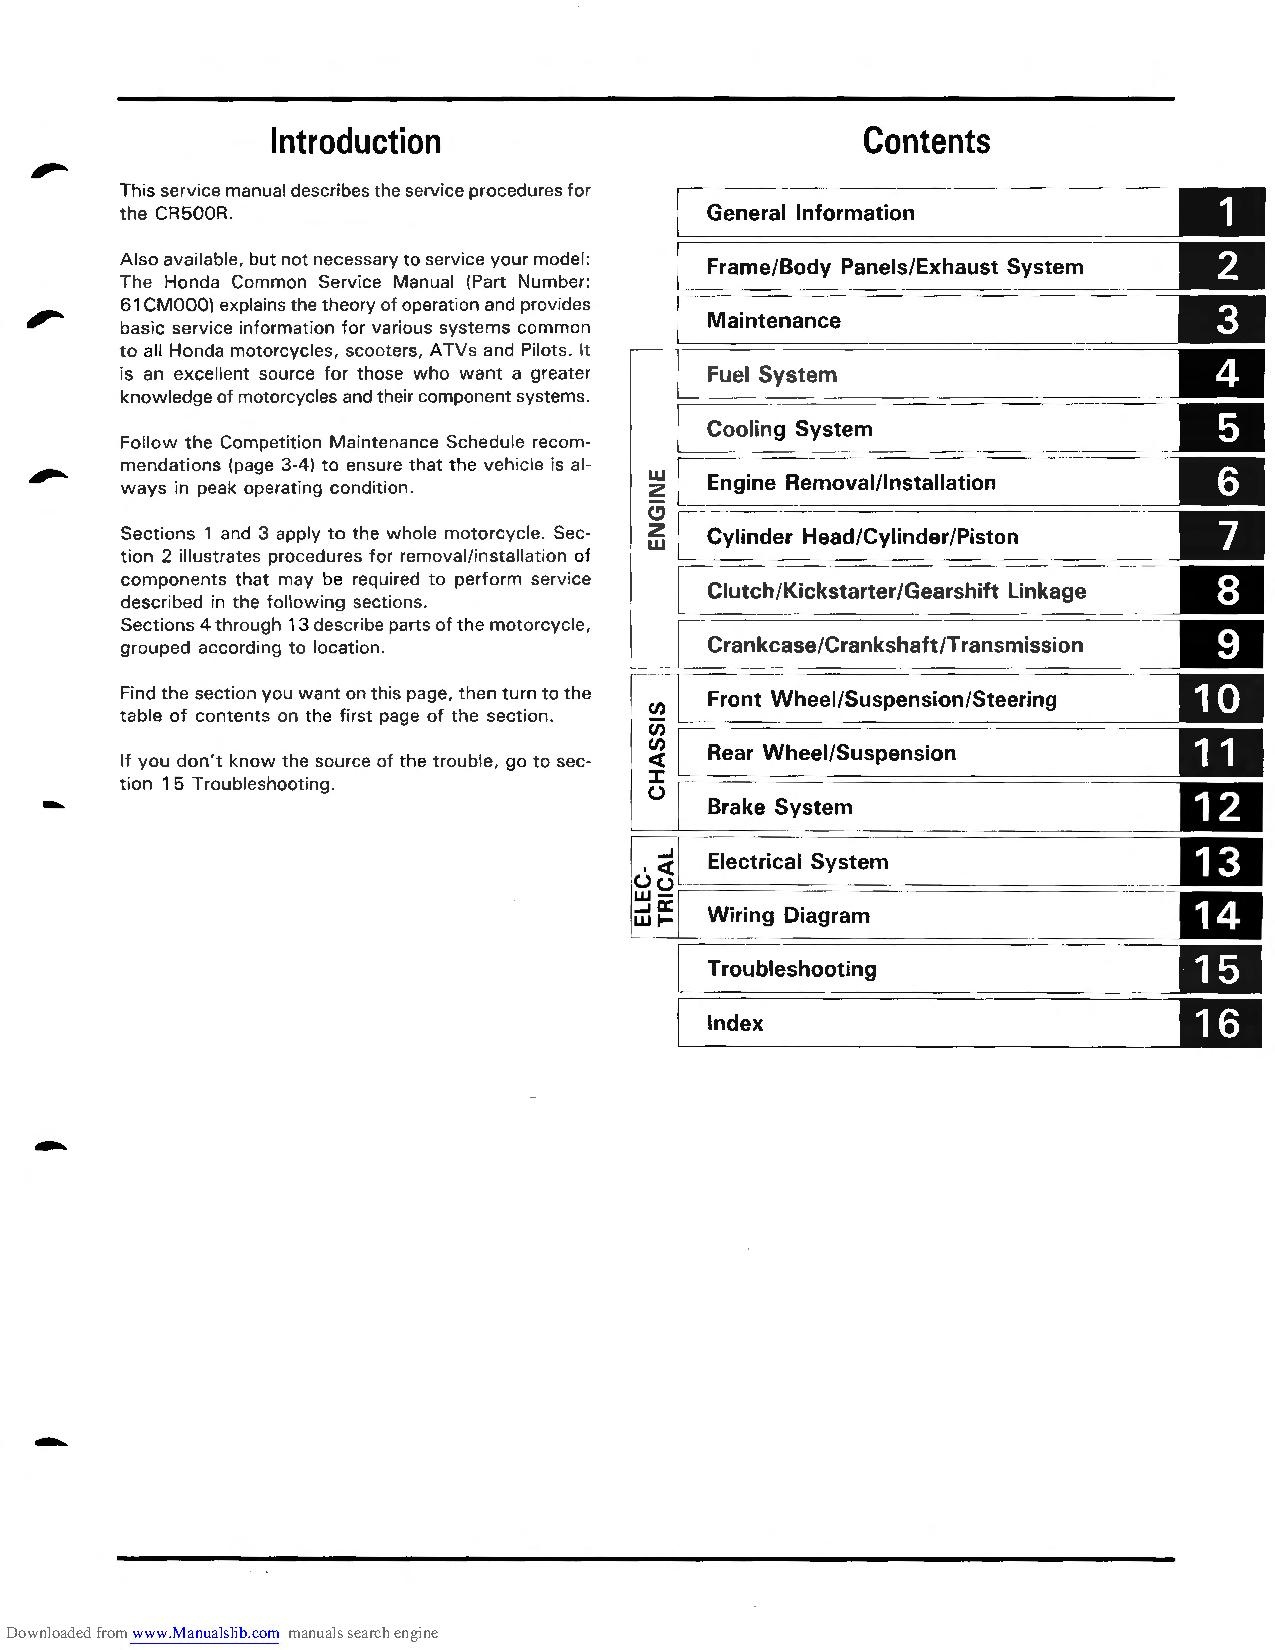 File:Honda CR500R 1992- Service Manual.pdf - CycleChaos